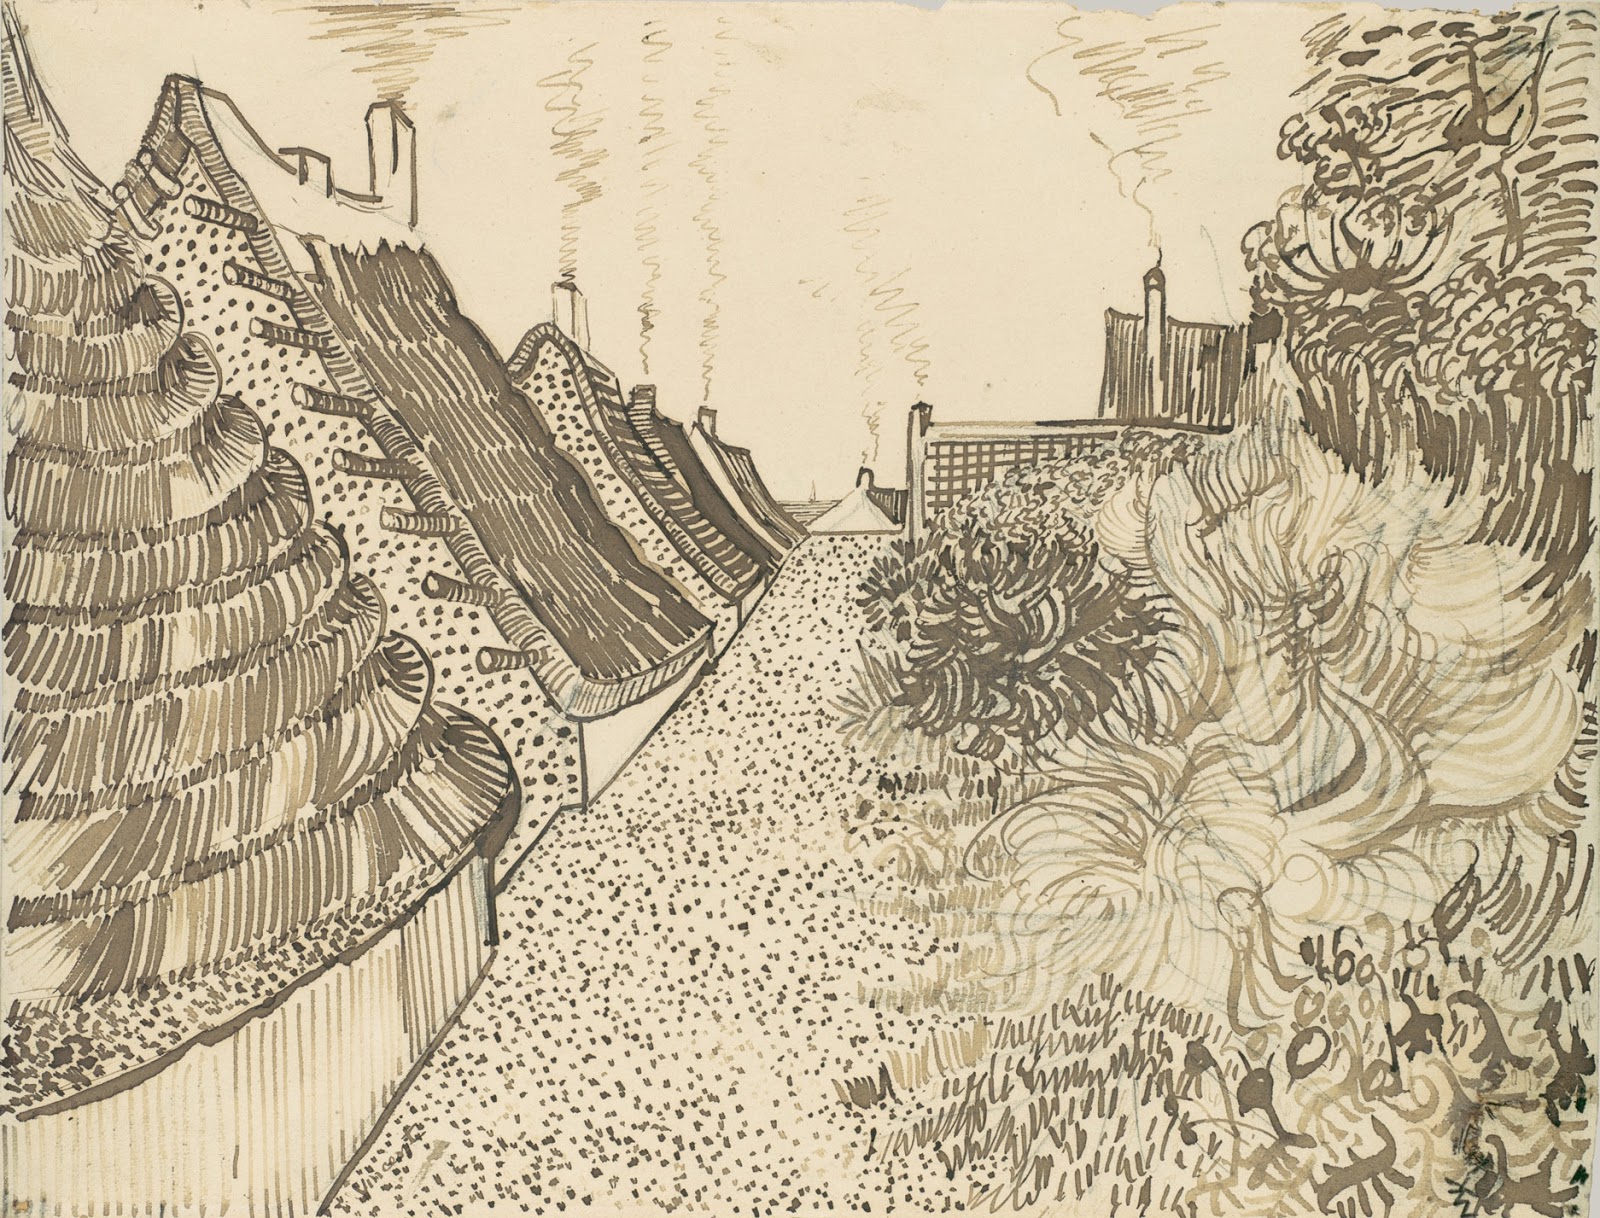 Vincent+Van+Gogh-1853-1890 (802).jpg